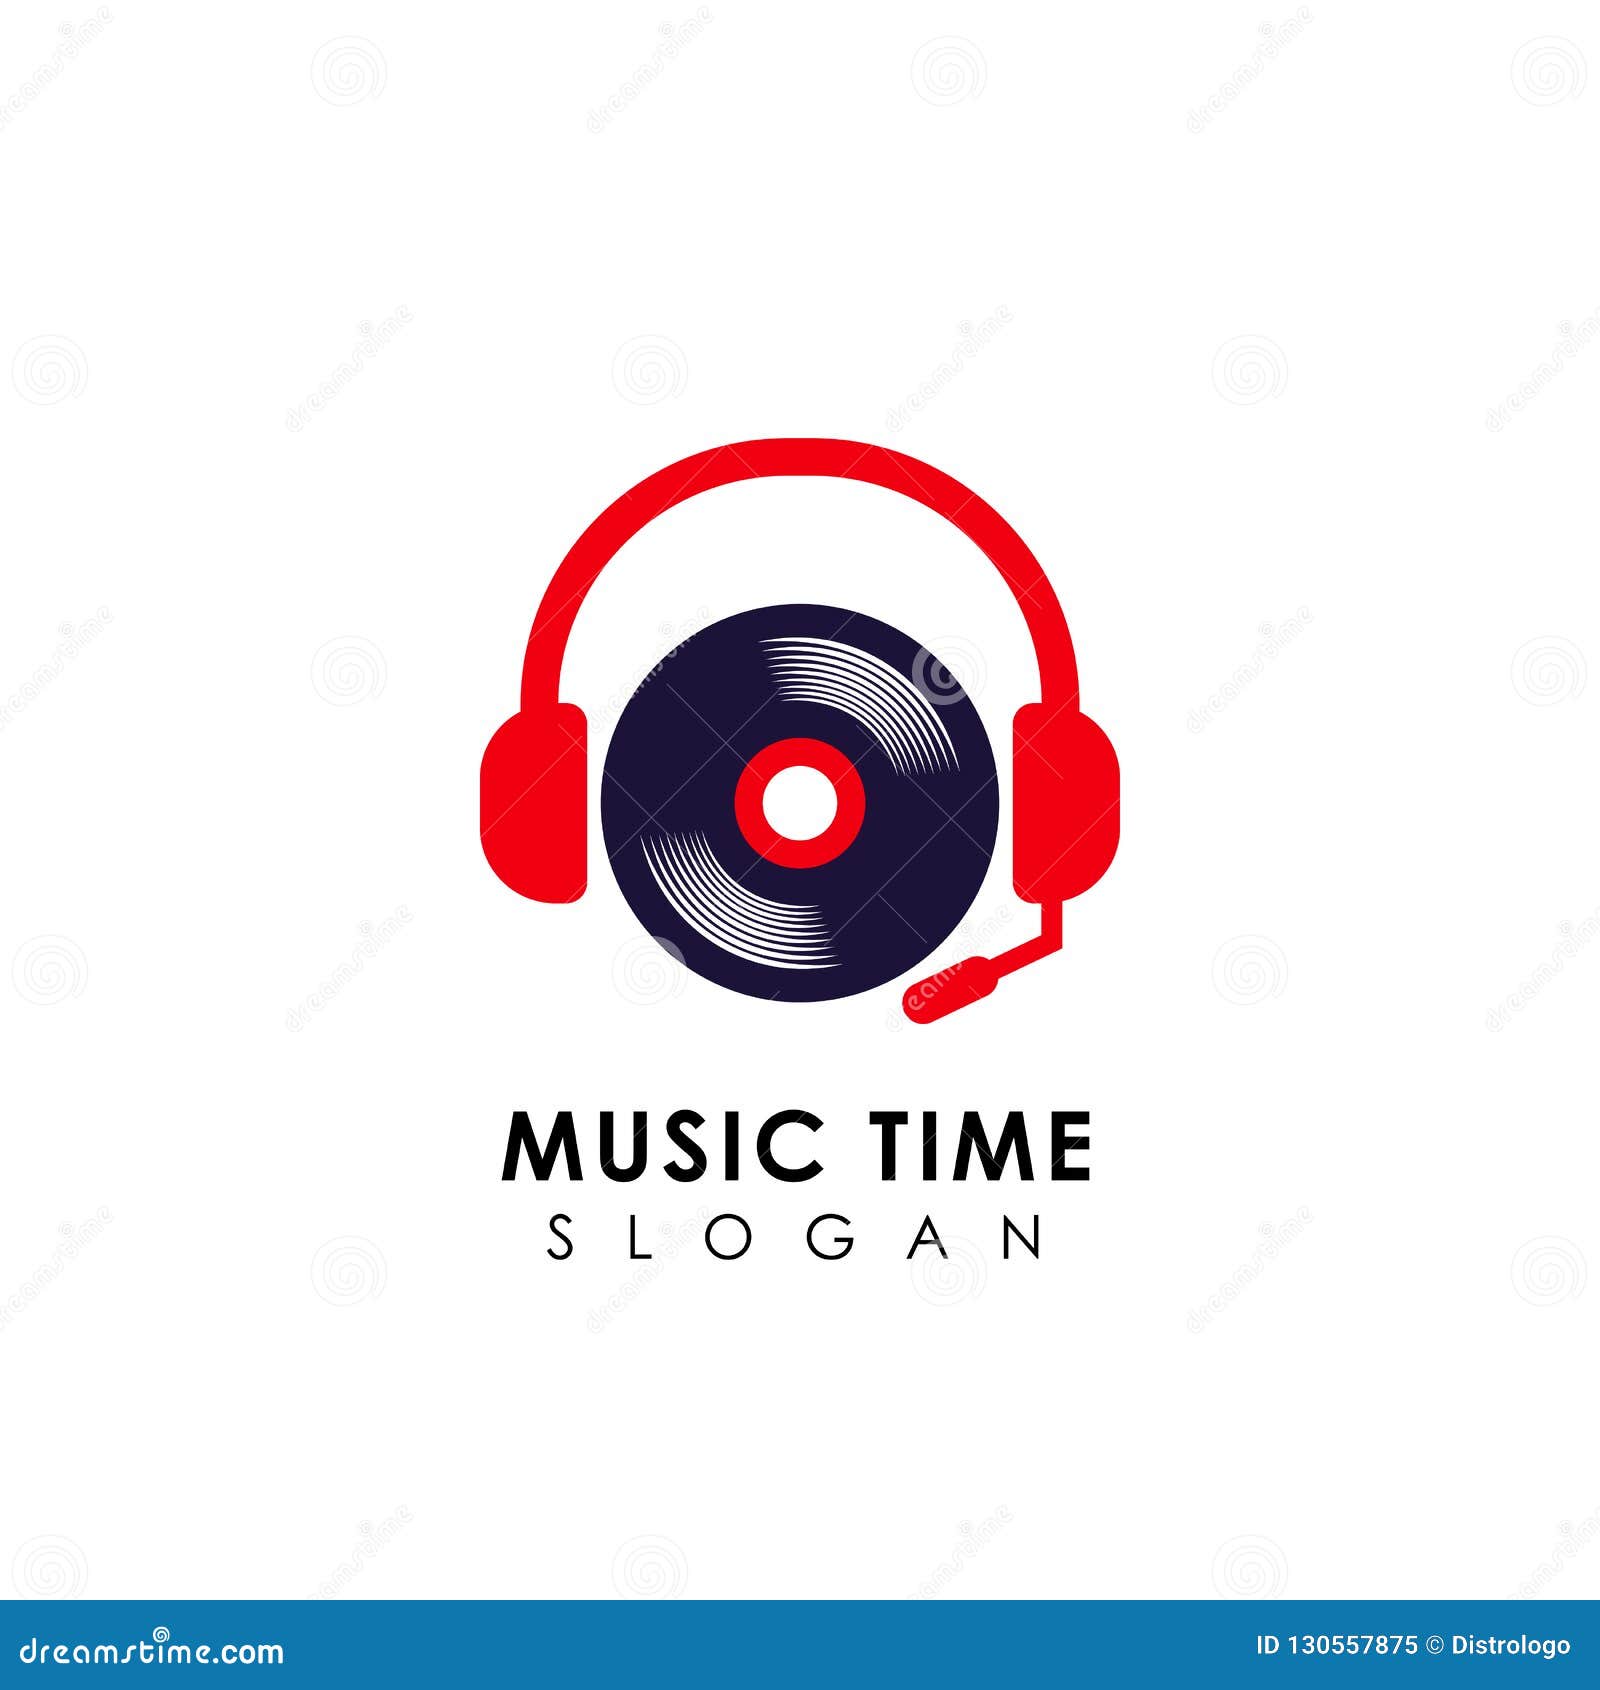 Music Logo Design With Headphone And Vinyl Illustration Dj Logo Stock Vector Illustration Of Design Vector